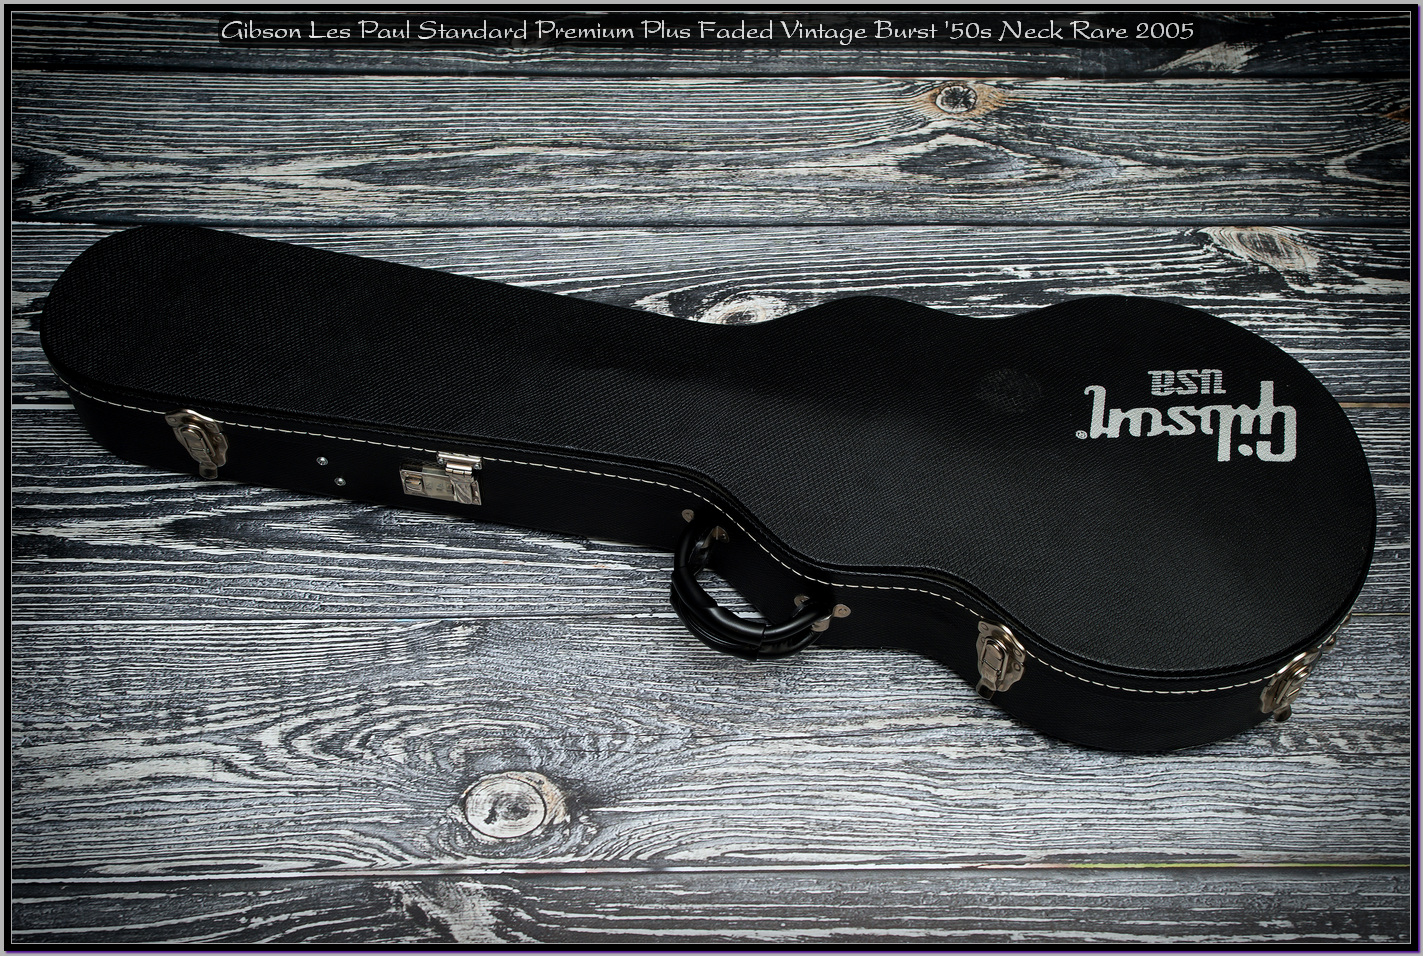 Gibson Les Paul Standard Premium Plus Faded Vintage Burst 